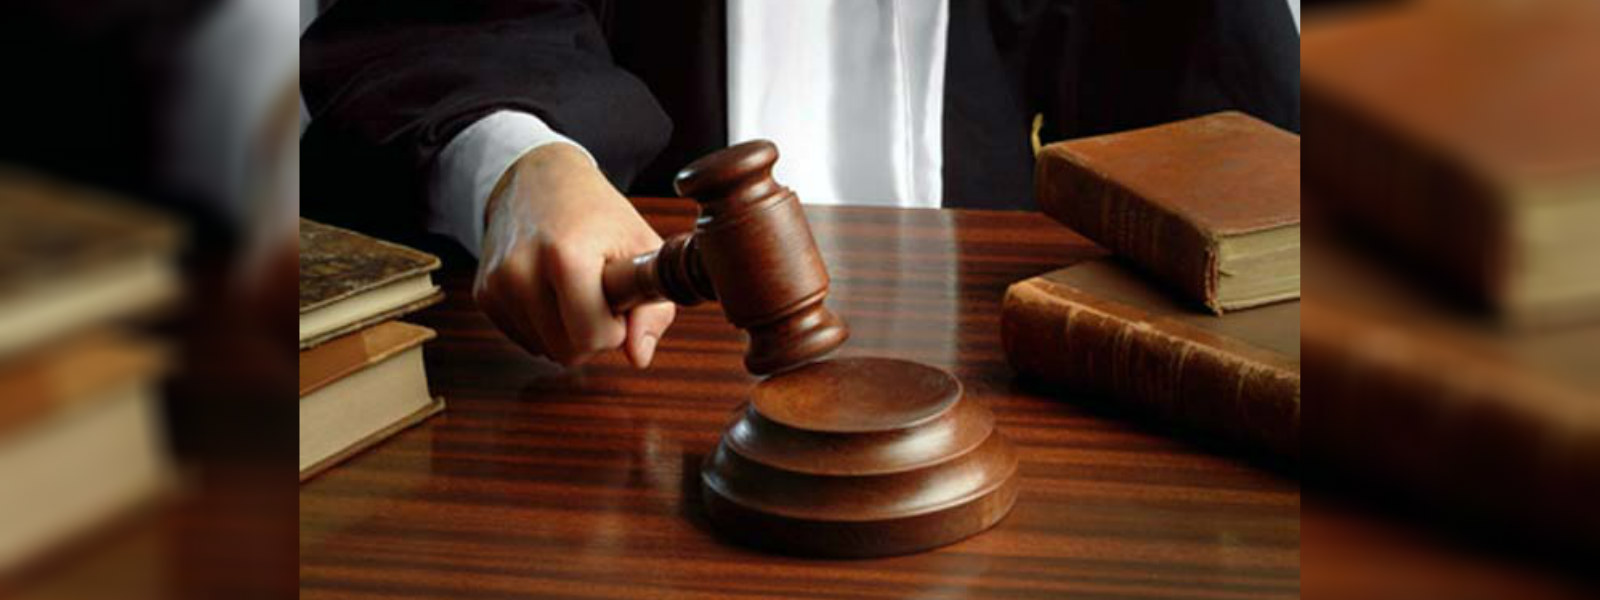 Man accused of rape sentenced to 10 years rigorous imprisonment